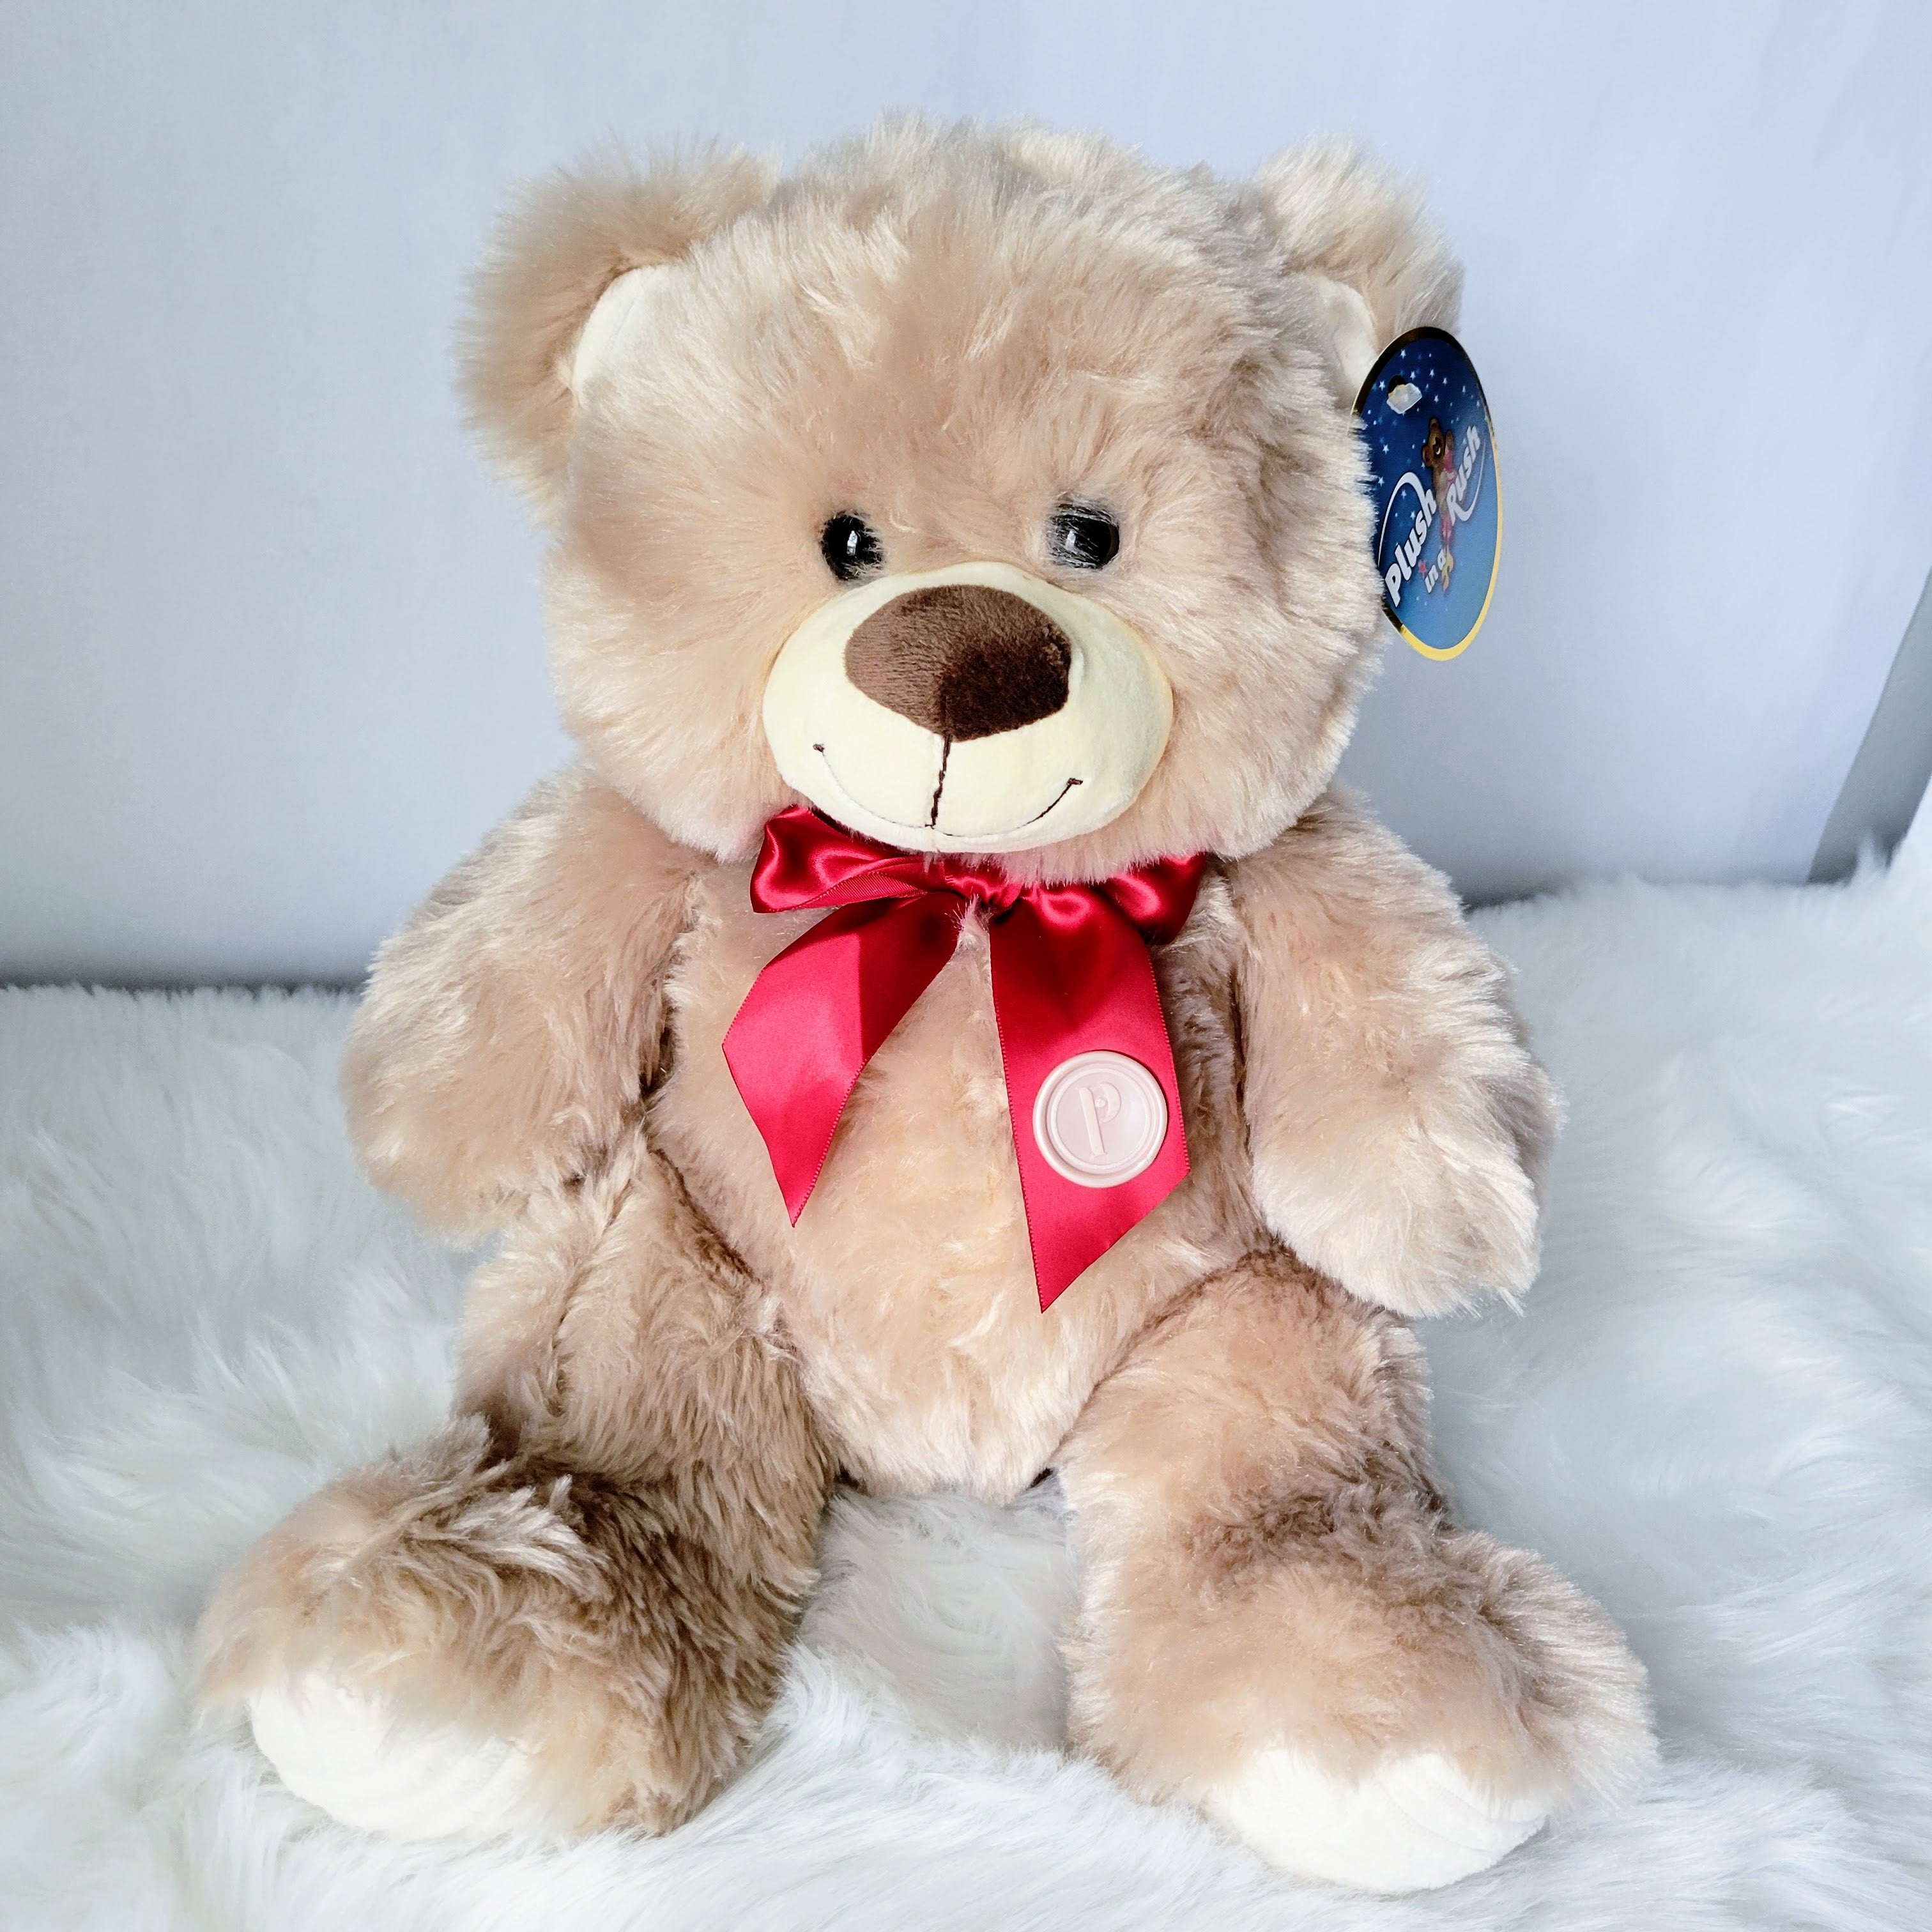 Beary Plush | The Stuffed Animal Companion